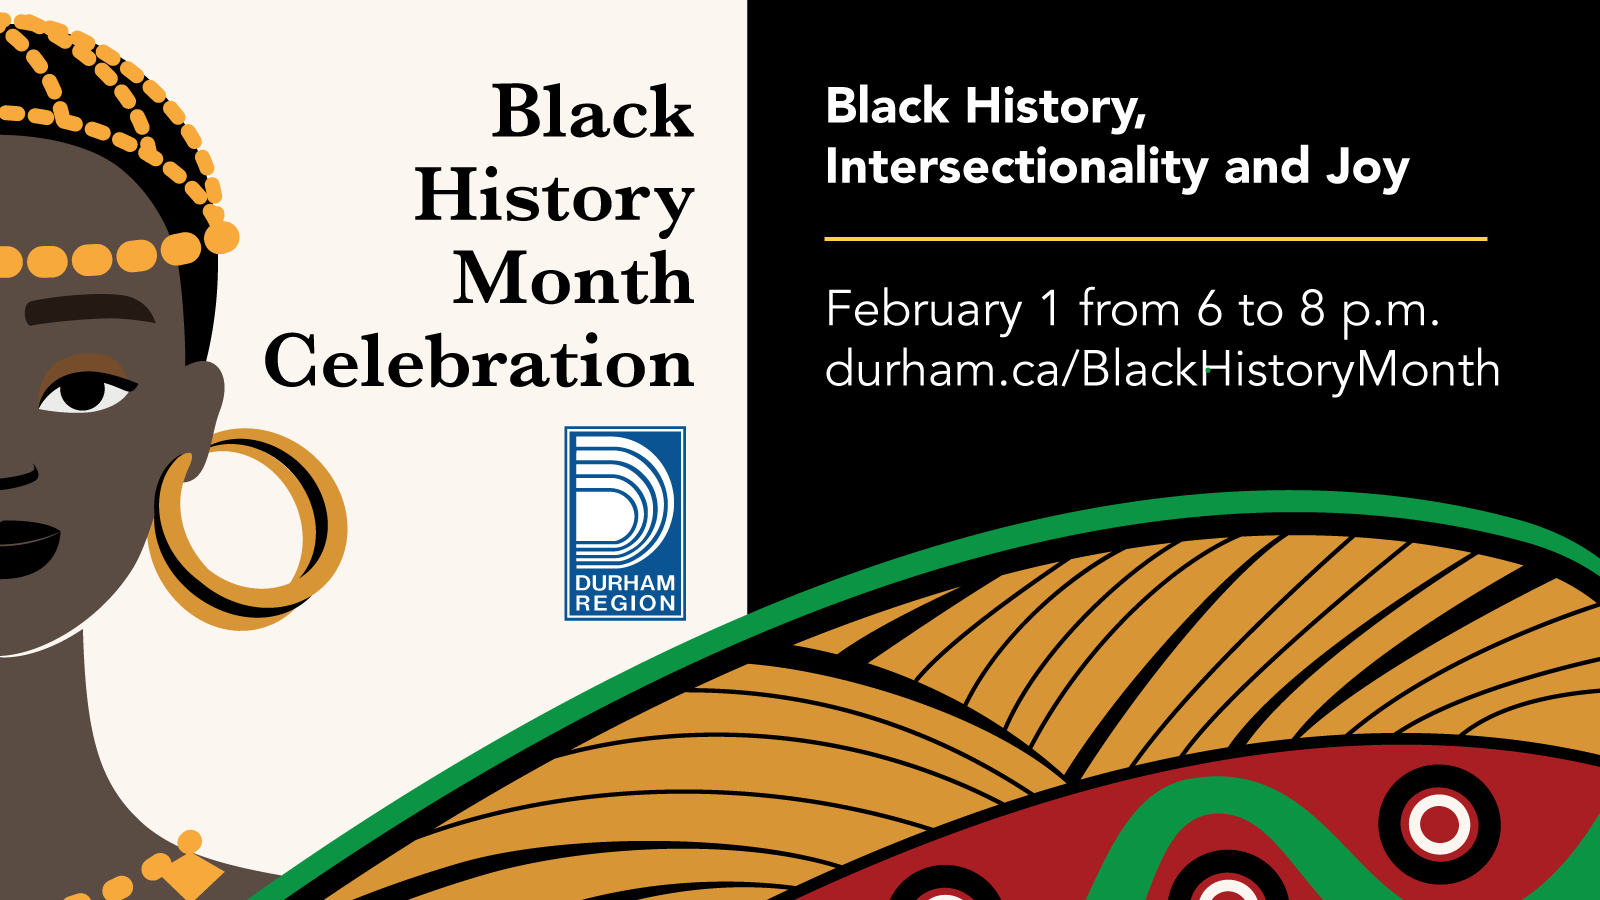 Black History, Intersectionality and Joy